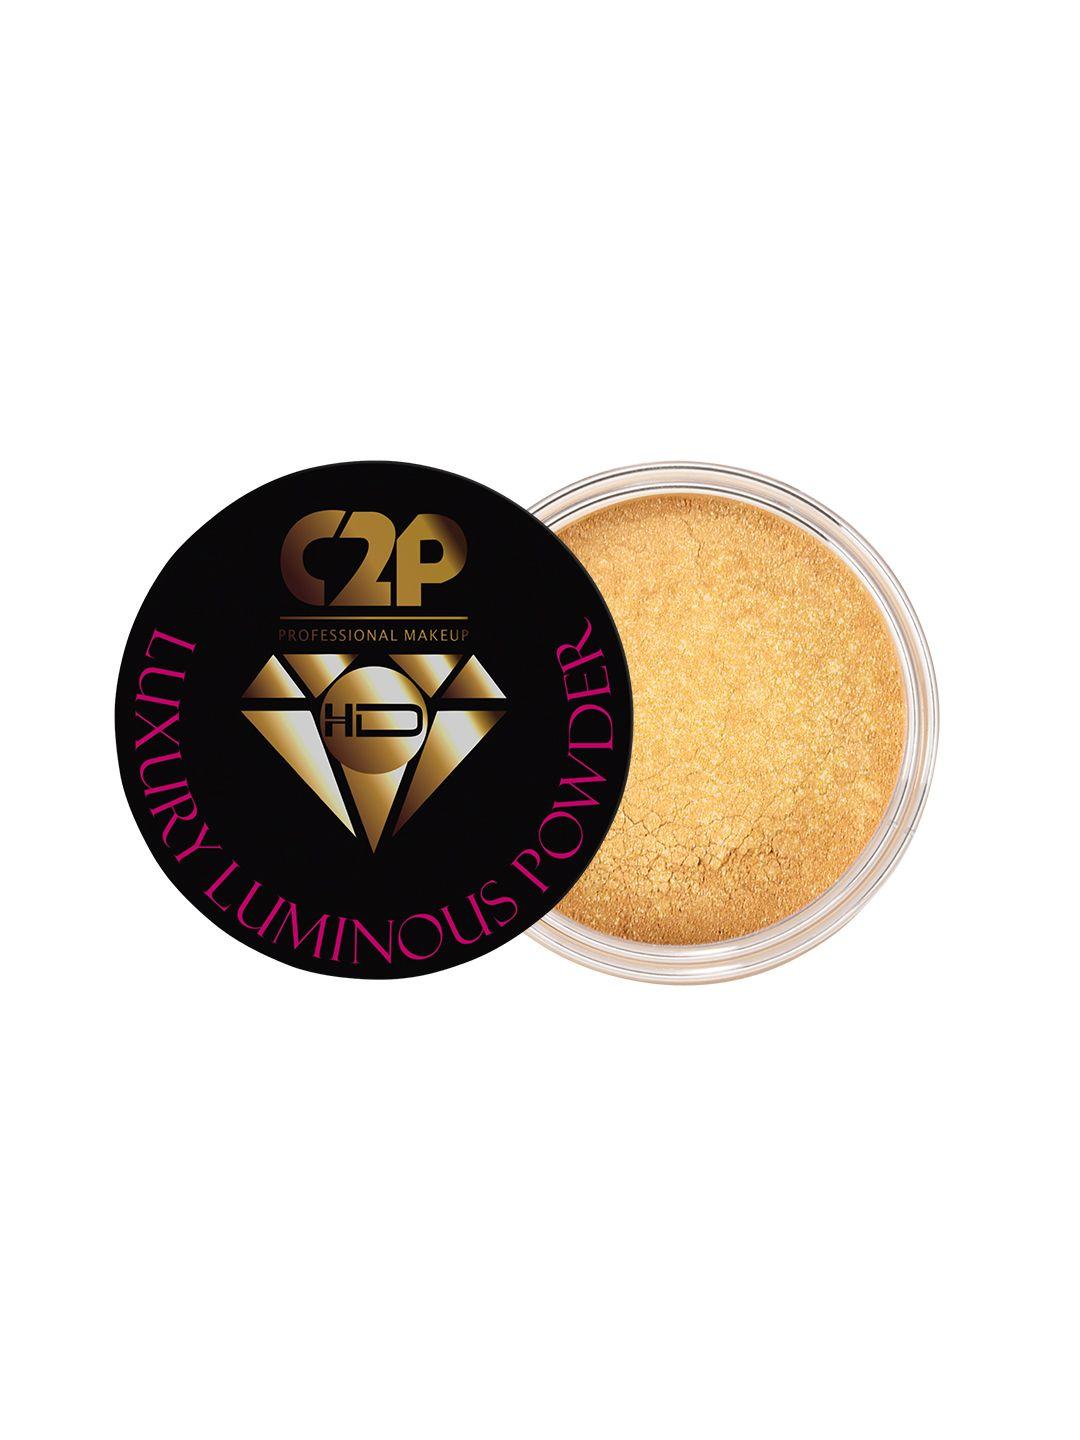 c2p-professional-makeup-hd-luxury-luminous-shimmer-powder---mood-nude-02